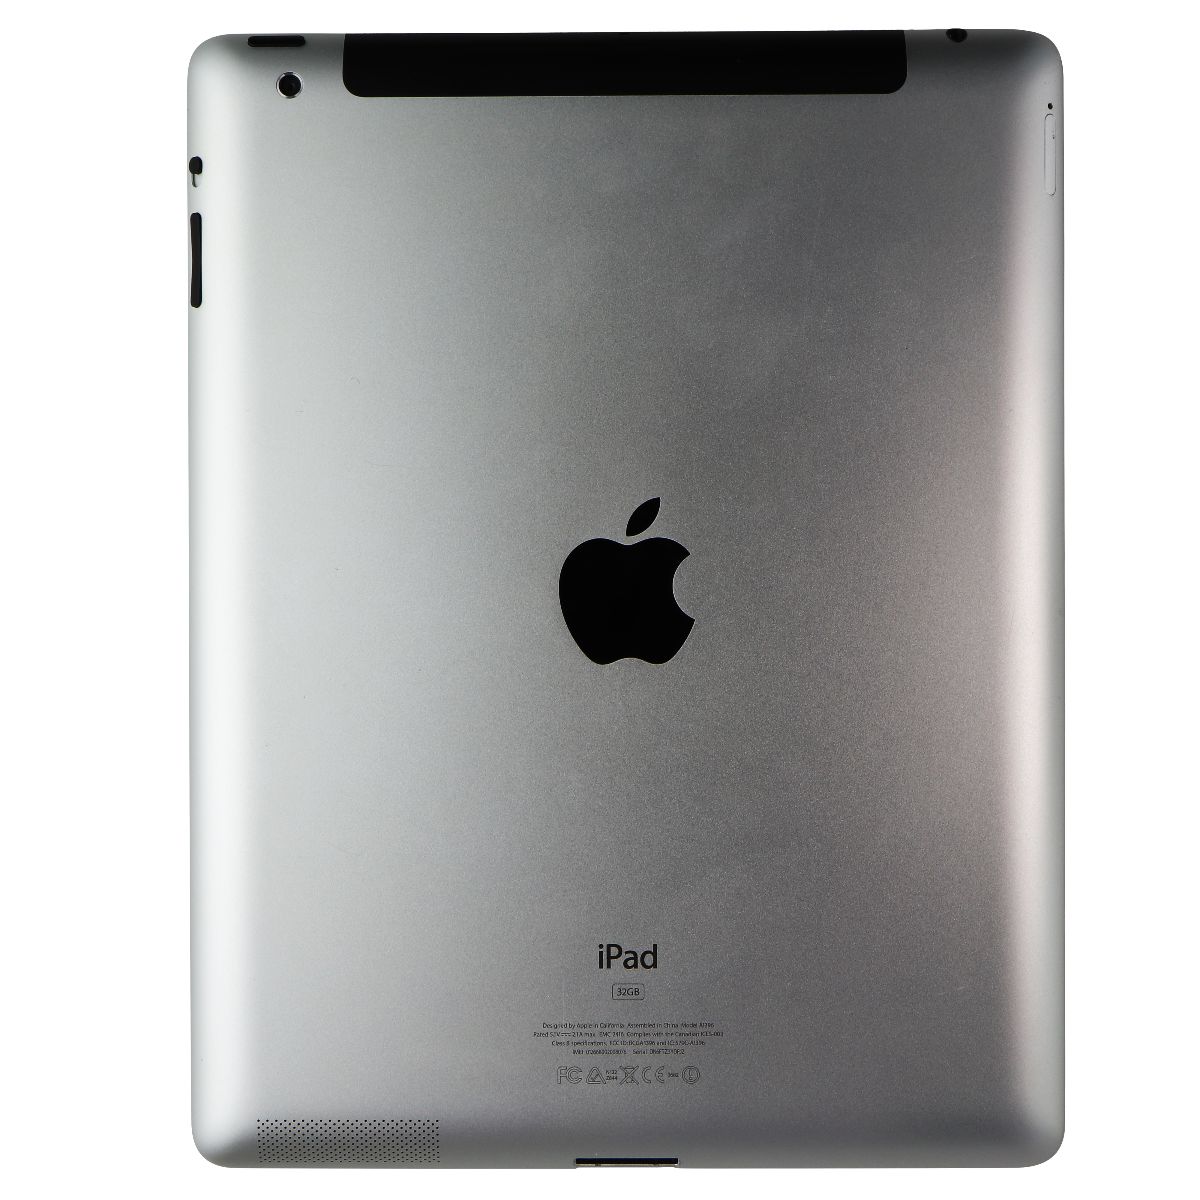 Apple iPad 2 (9.7) 2nd Gen Tablet (A1396) Wi-Fi + 3G Unlocked - 32GB / Black iPads, Tablets & eBook Readers Apple    - Simple Cell Bulk Wholesale Pricing - USA Seller